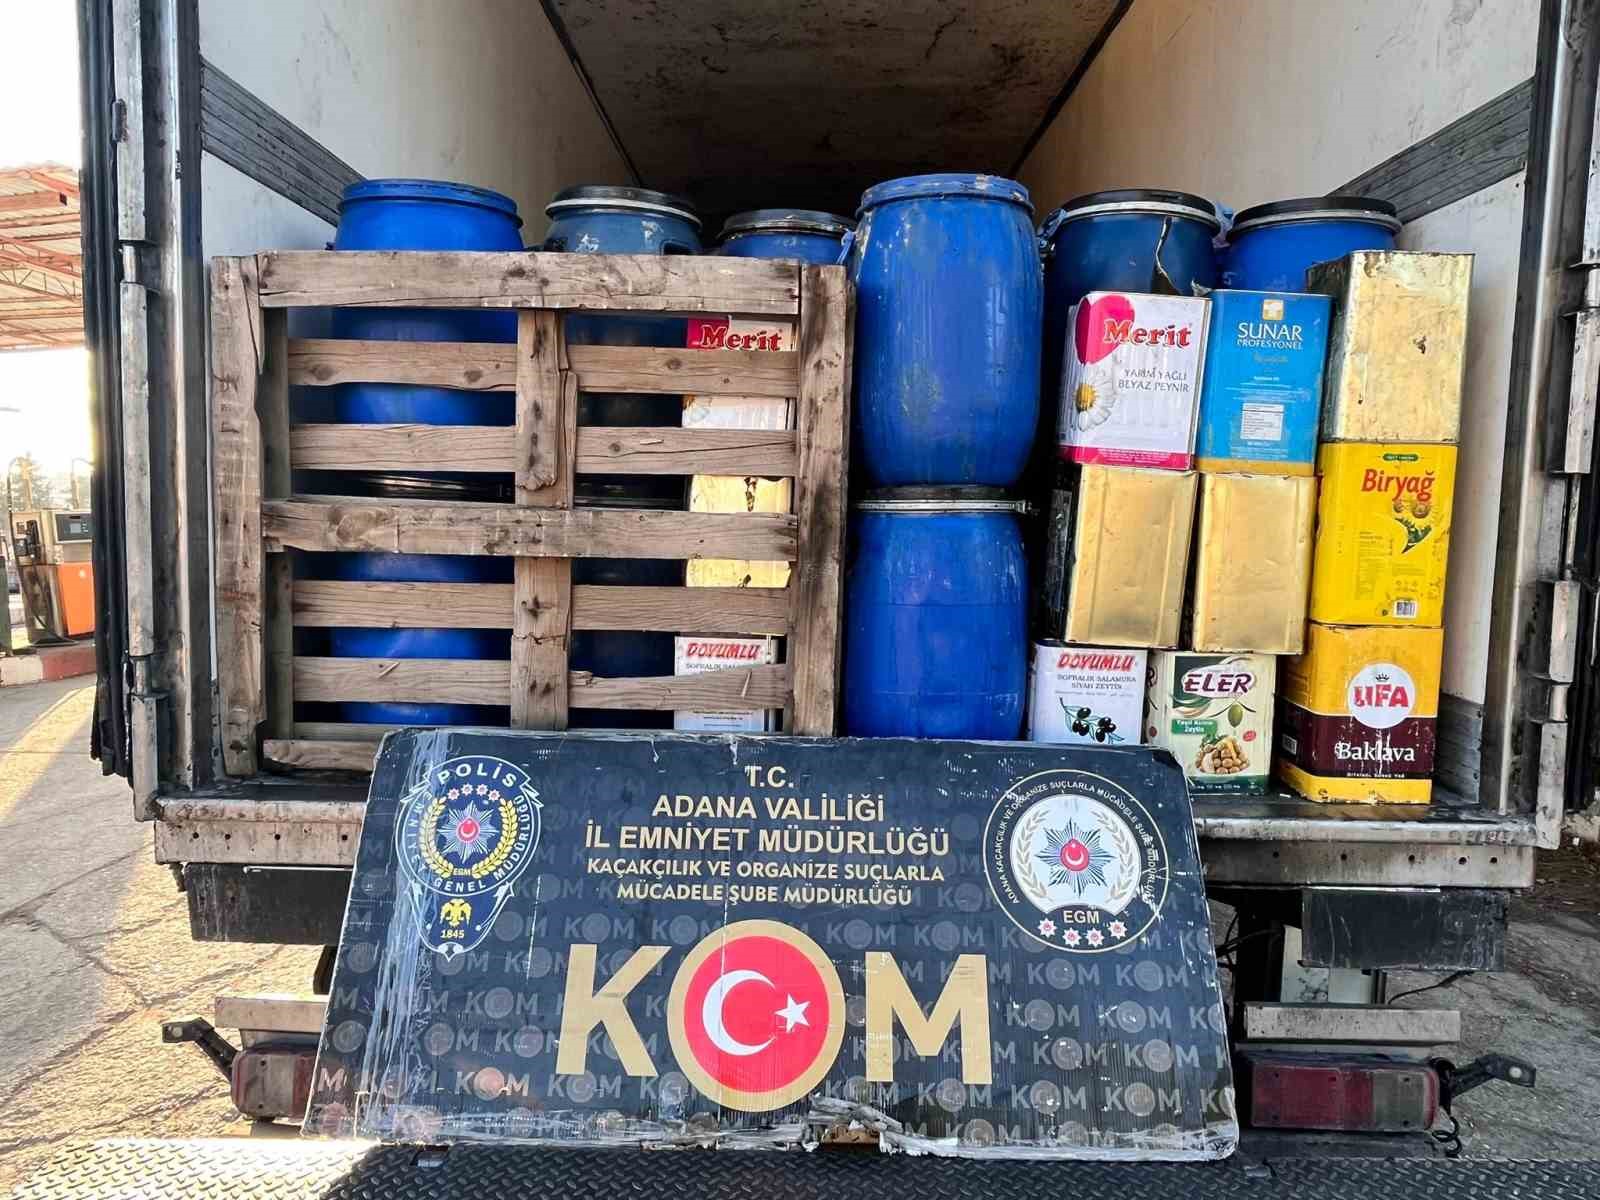 Adana'da 63 bin litre kaçak akaryakıt ele geçirildi